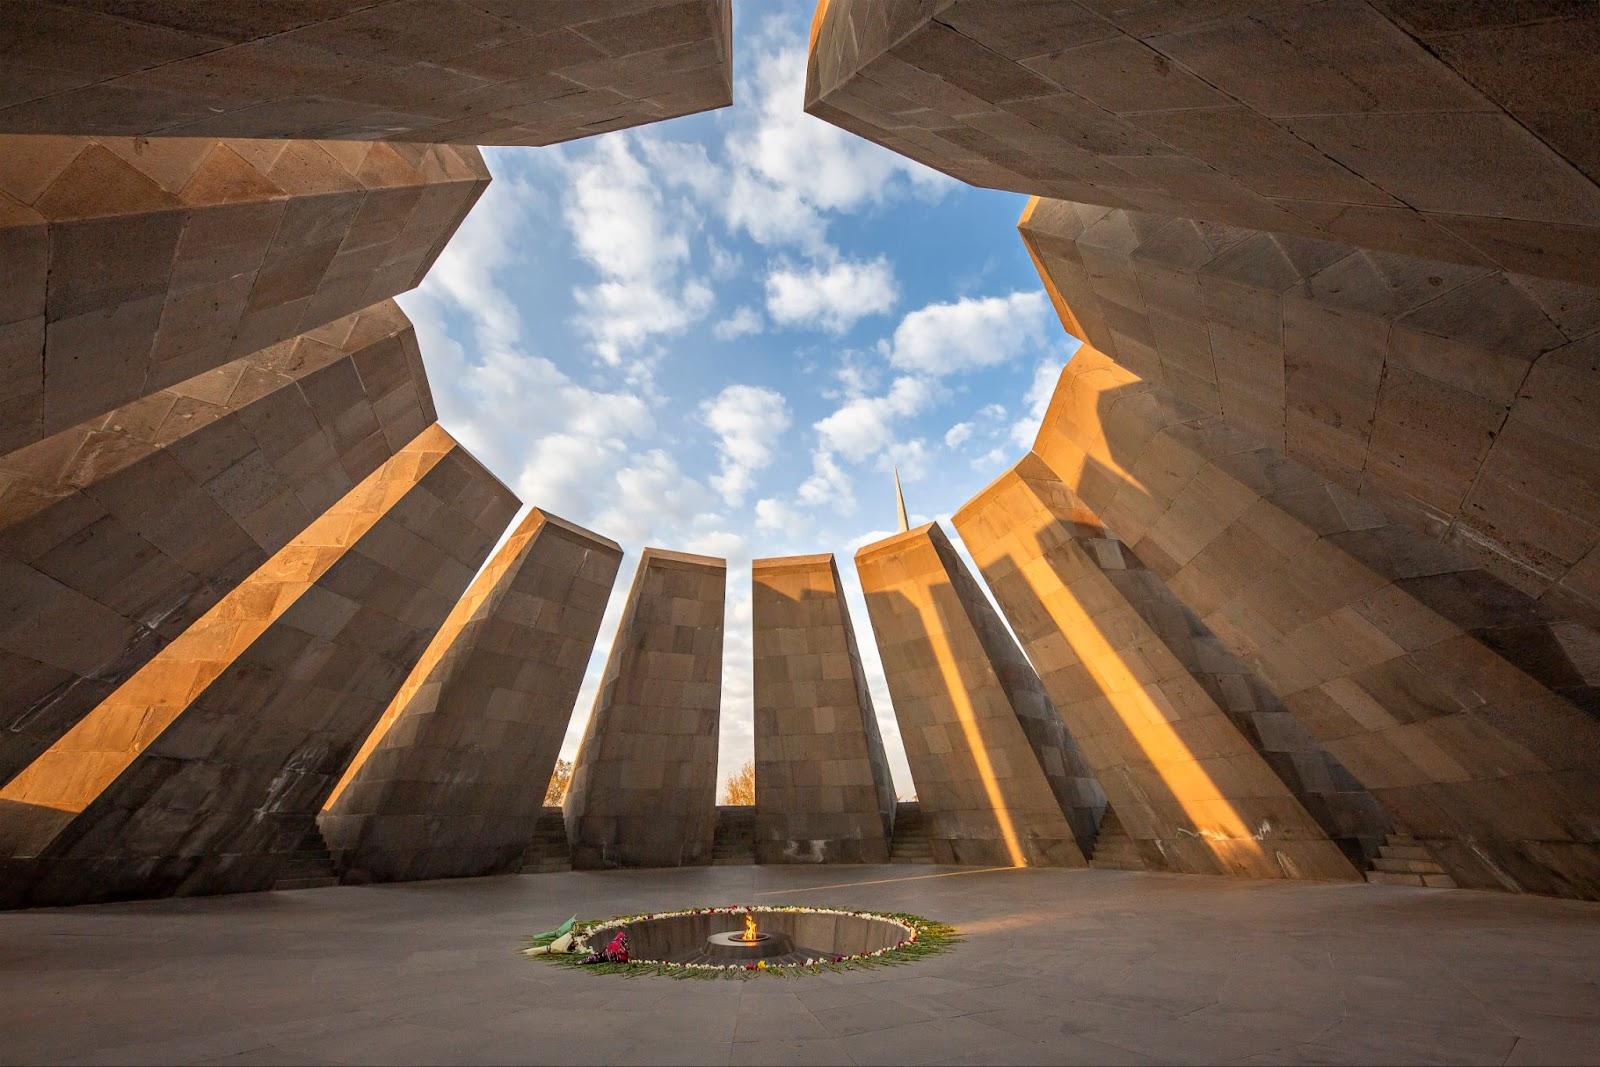 Armenian genocide memorial and its eternal flame, in Yerevan, Armenia.
